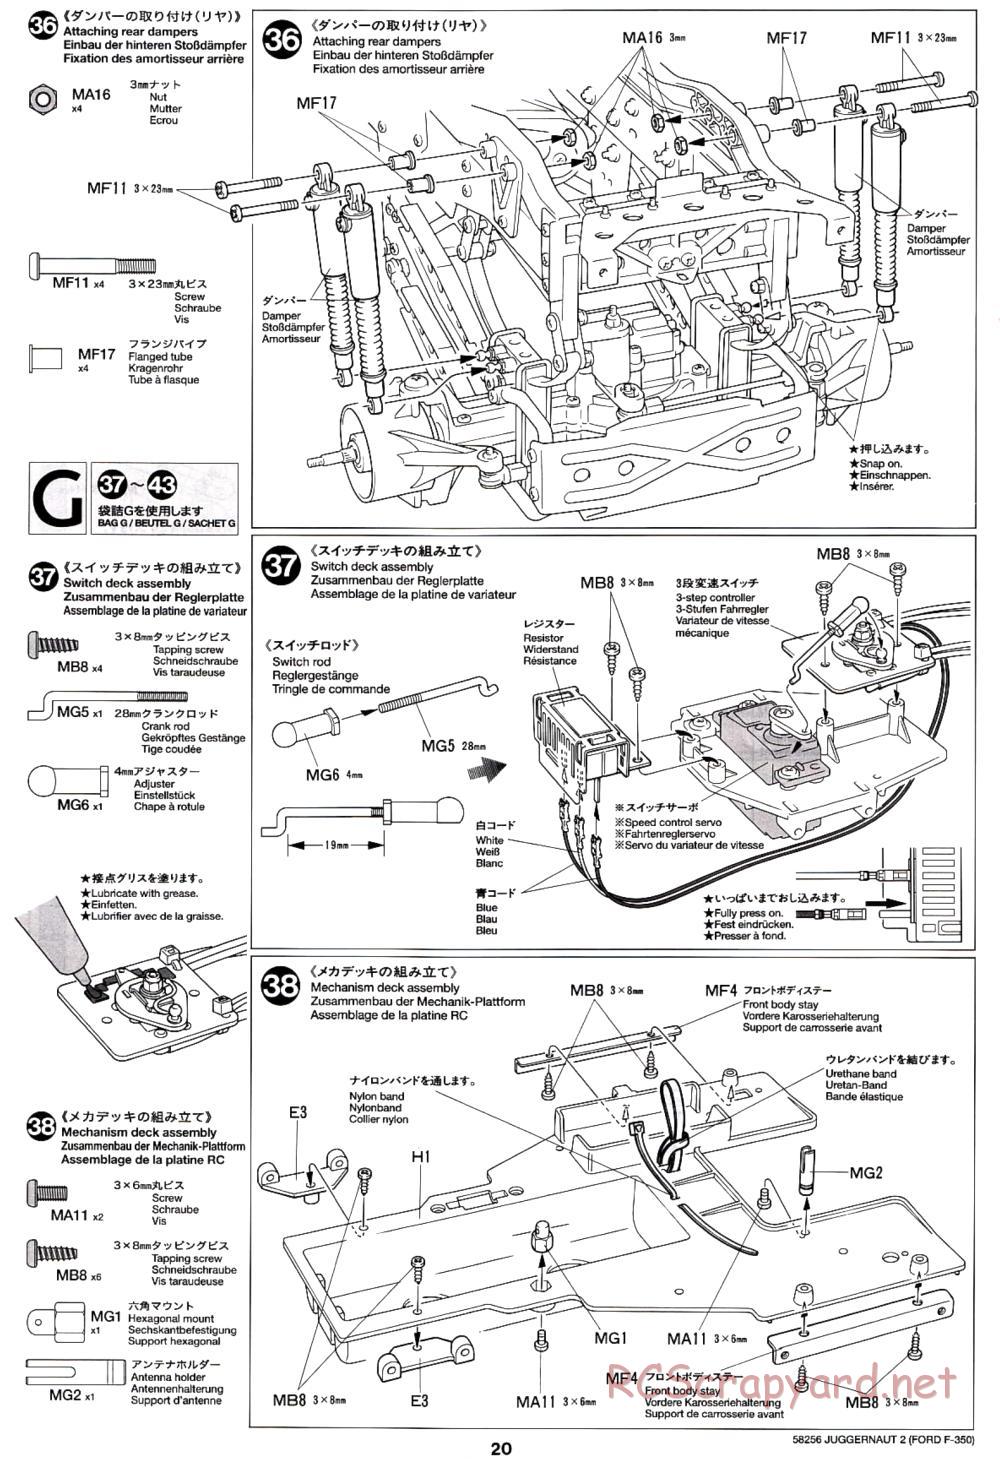 Tamiya - Juggernaut 2 Chassis - Manual - Page 20